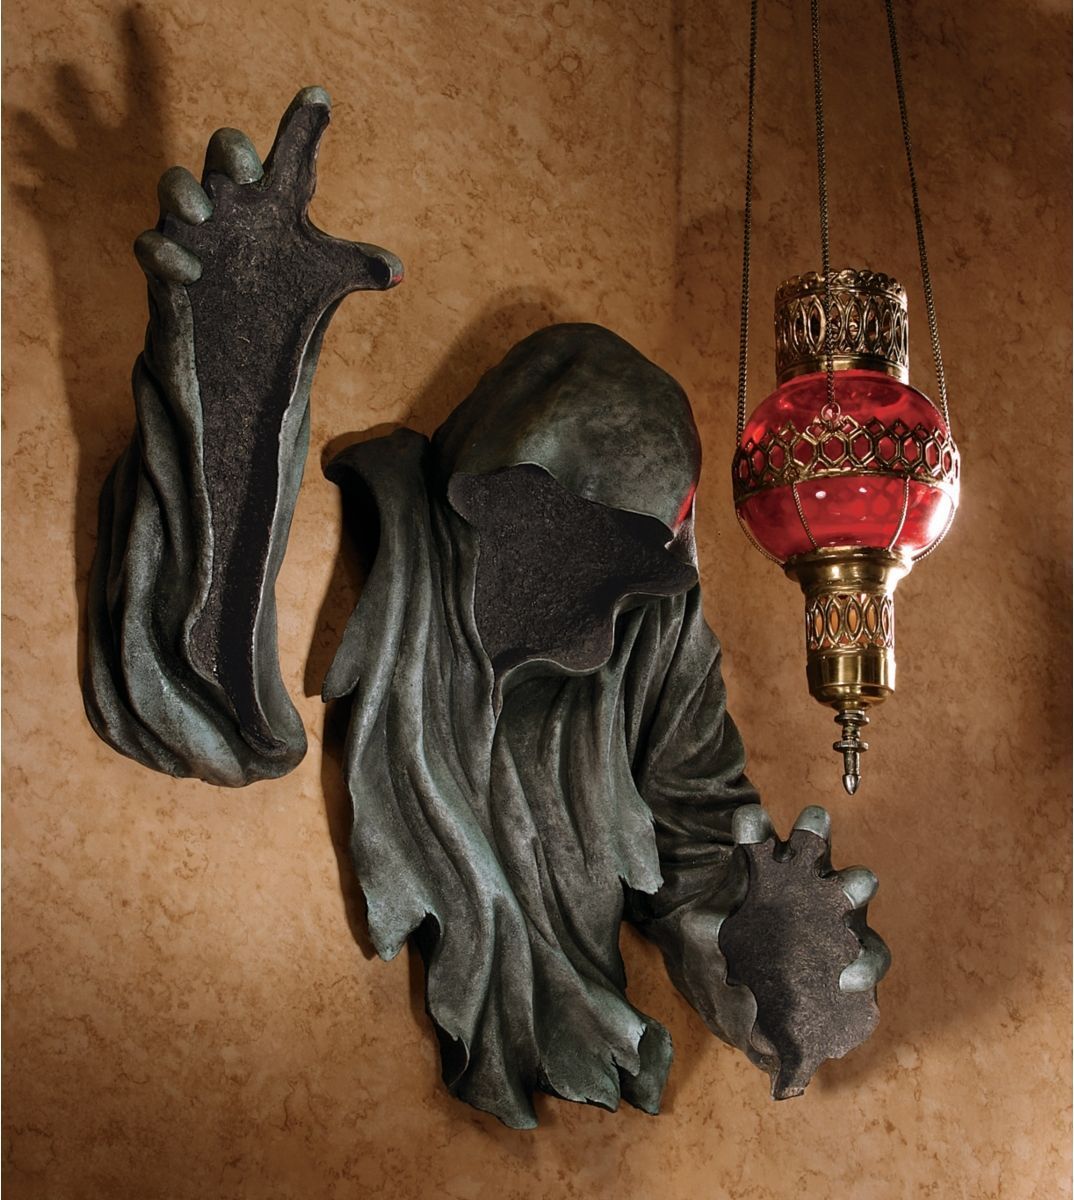 Death is Reaching Grim Reaper Hooded Figure Matte Black Floating Wall Sculpture